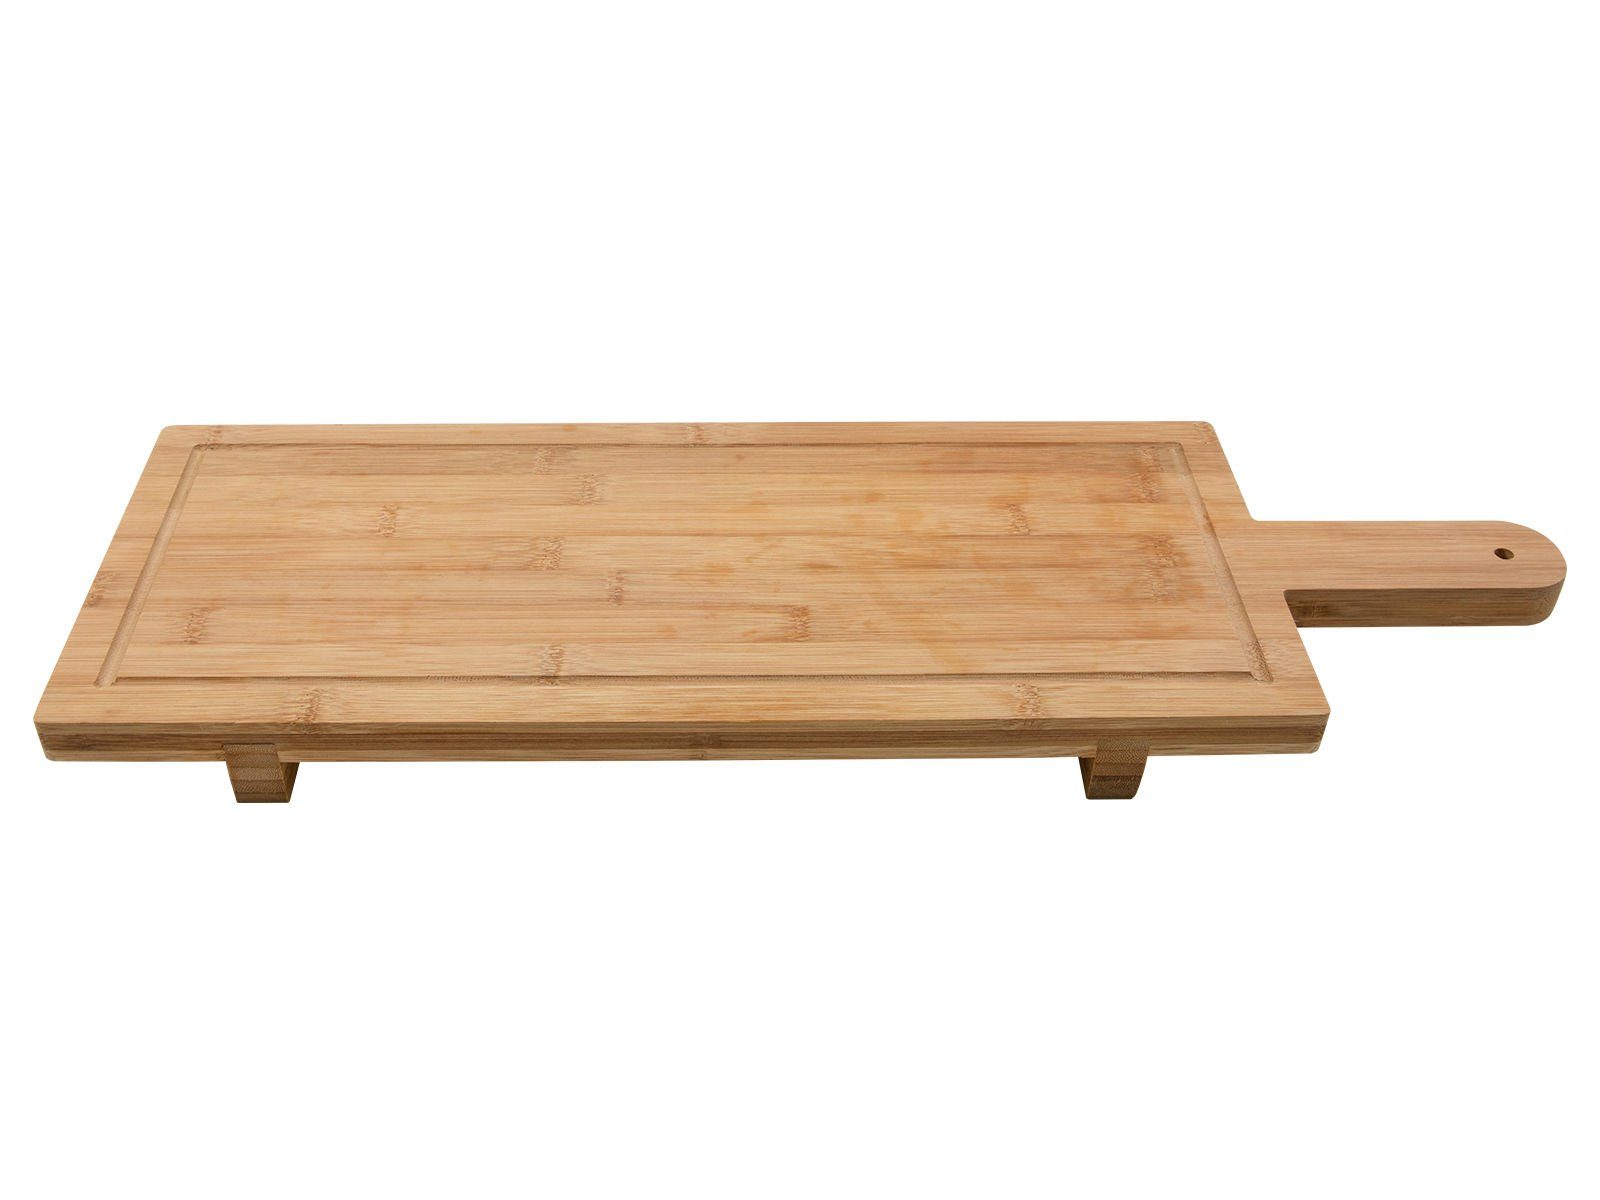 Spetebo Tablett Bambus Tapas Brett - 58 cm, Holz, Holz Servierbrett mit Griff